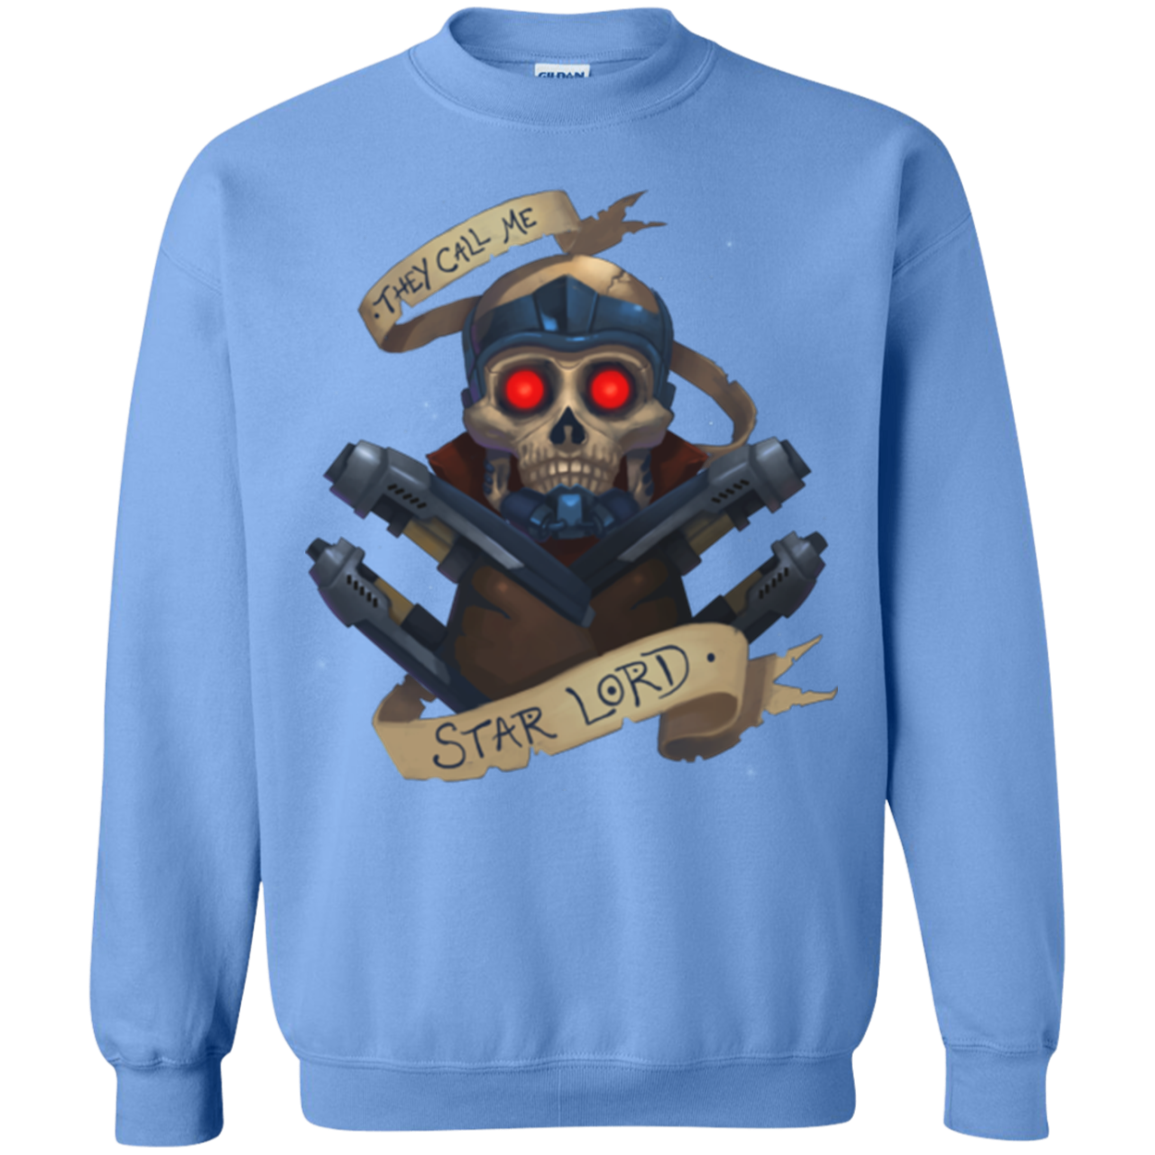 Starlord Crewneck Sweatshirt